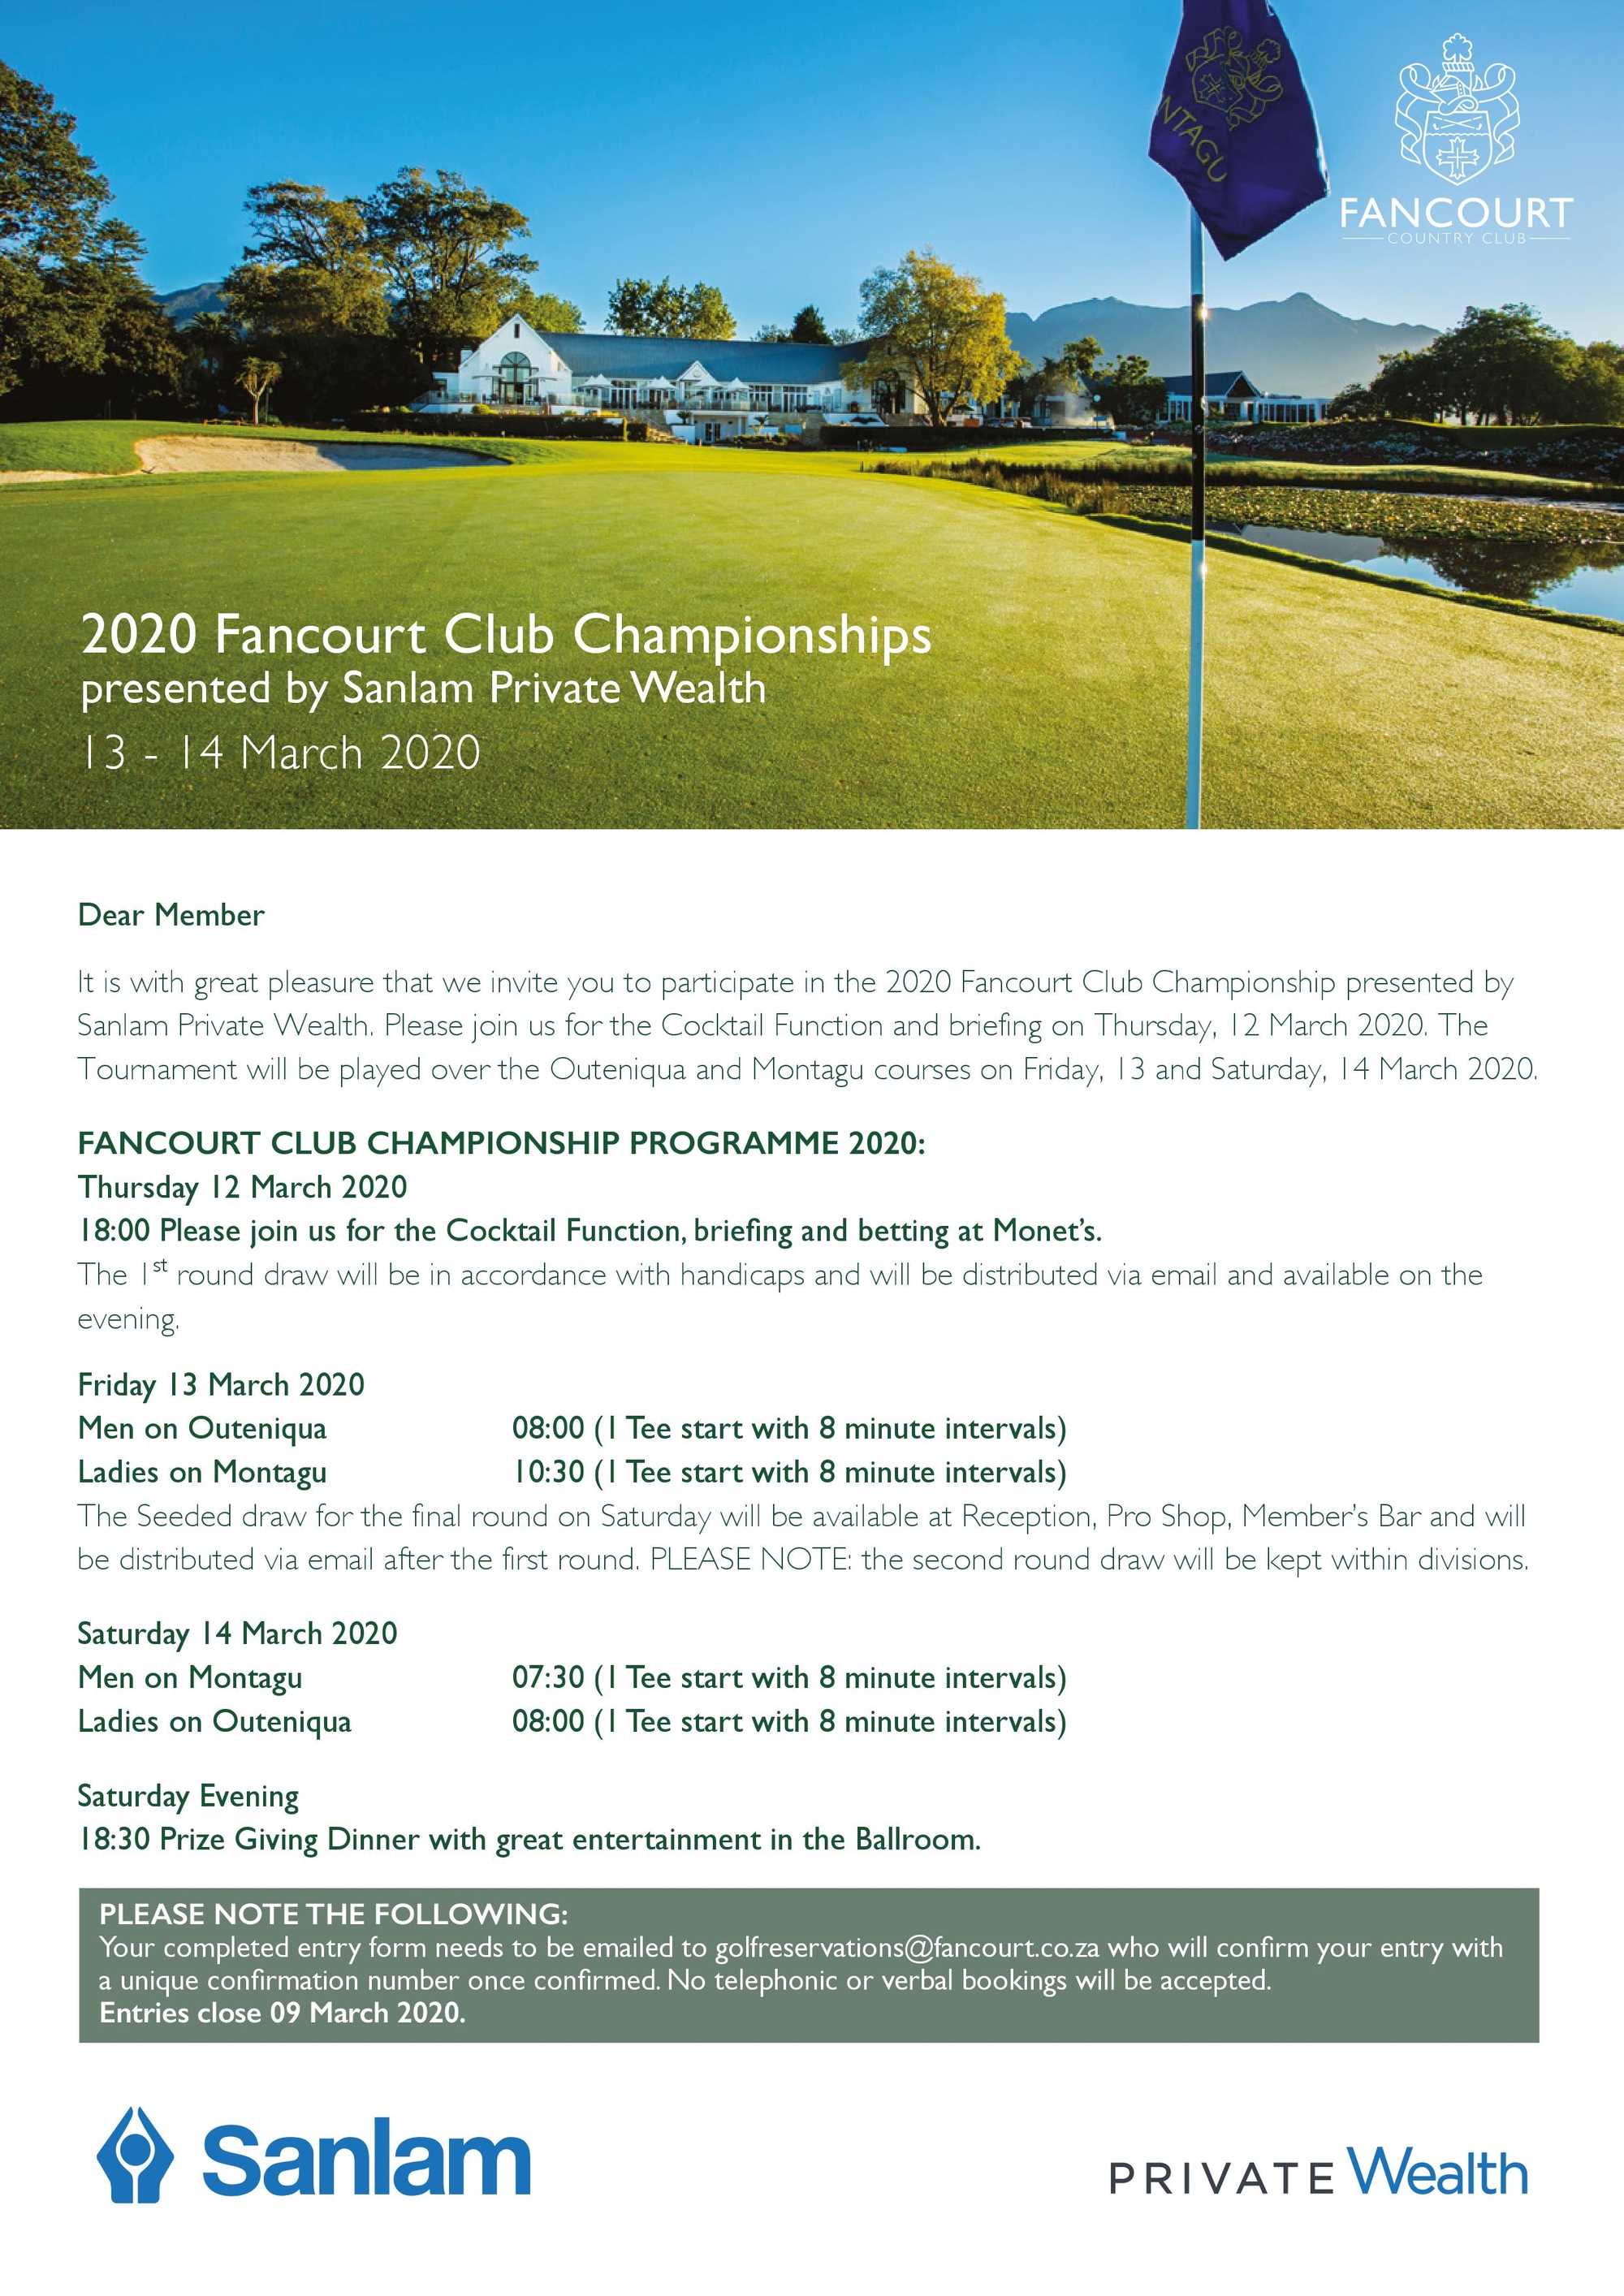 PGA National Club Championship Men's Tournament